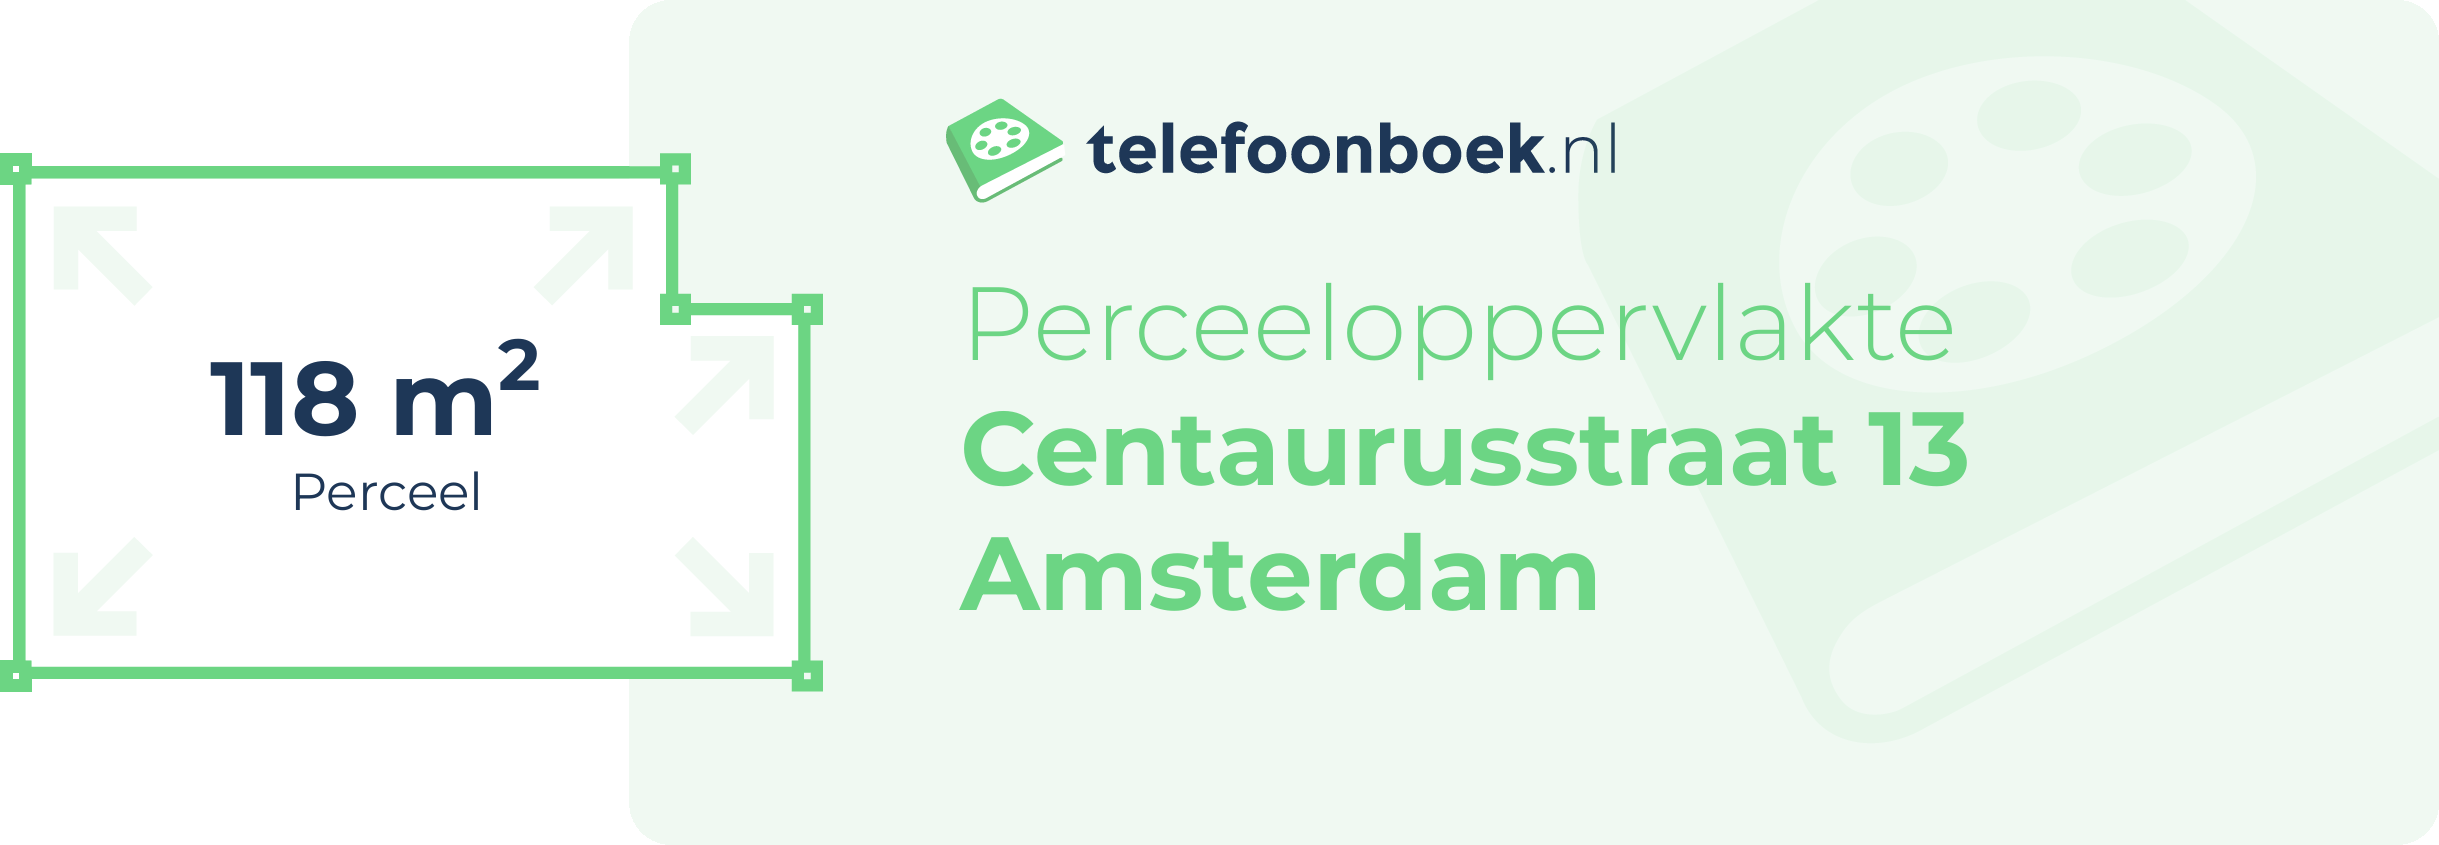 Perceeloppervlakte Centaurusstraat 13 Amsterdam